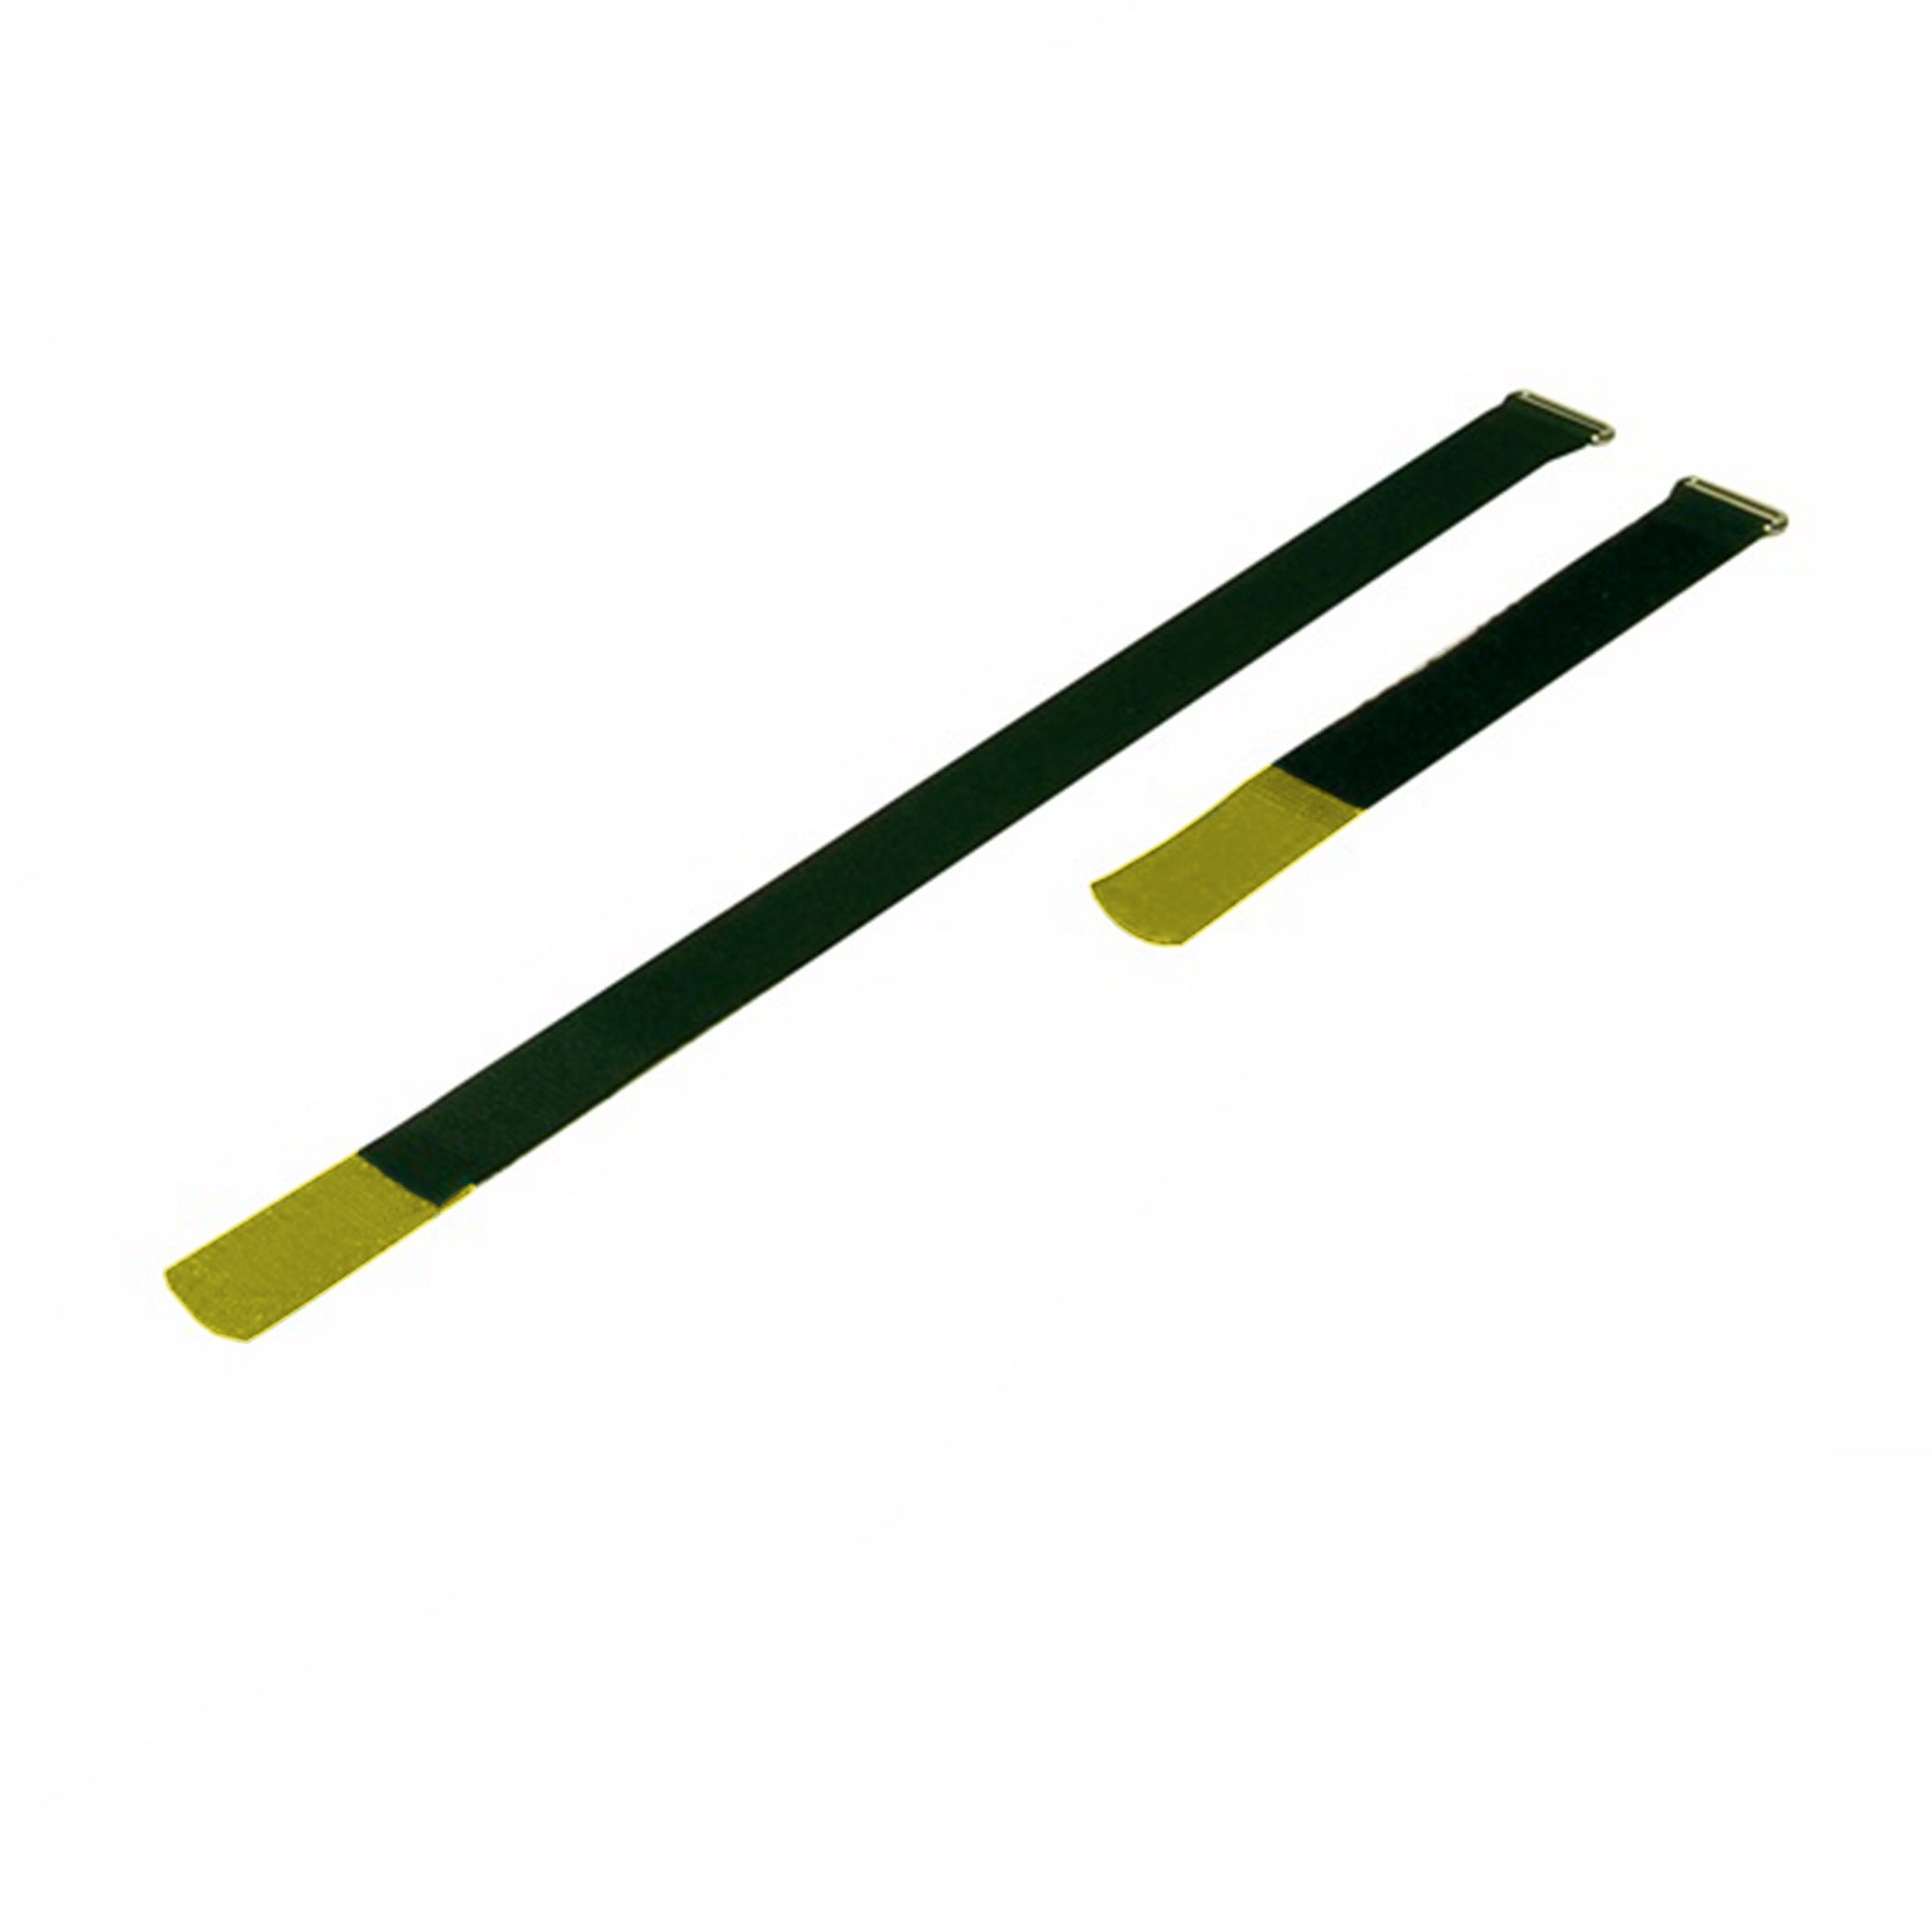 Kabelbinder 300x25mm met haaktip geel, (10 stuks) - a2530-700h